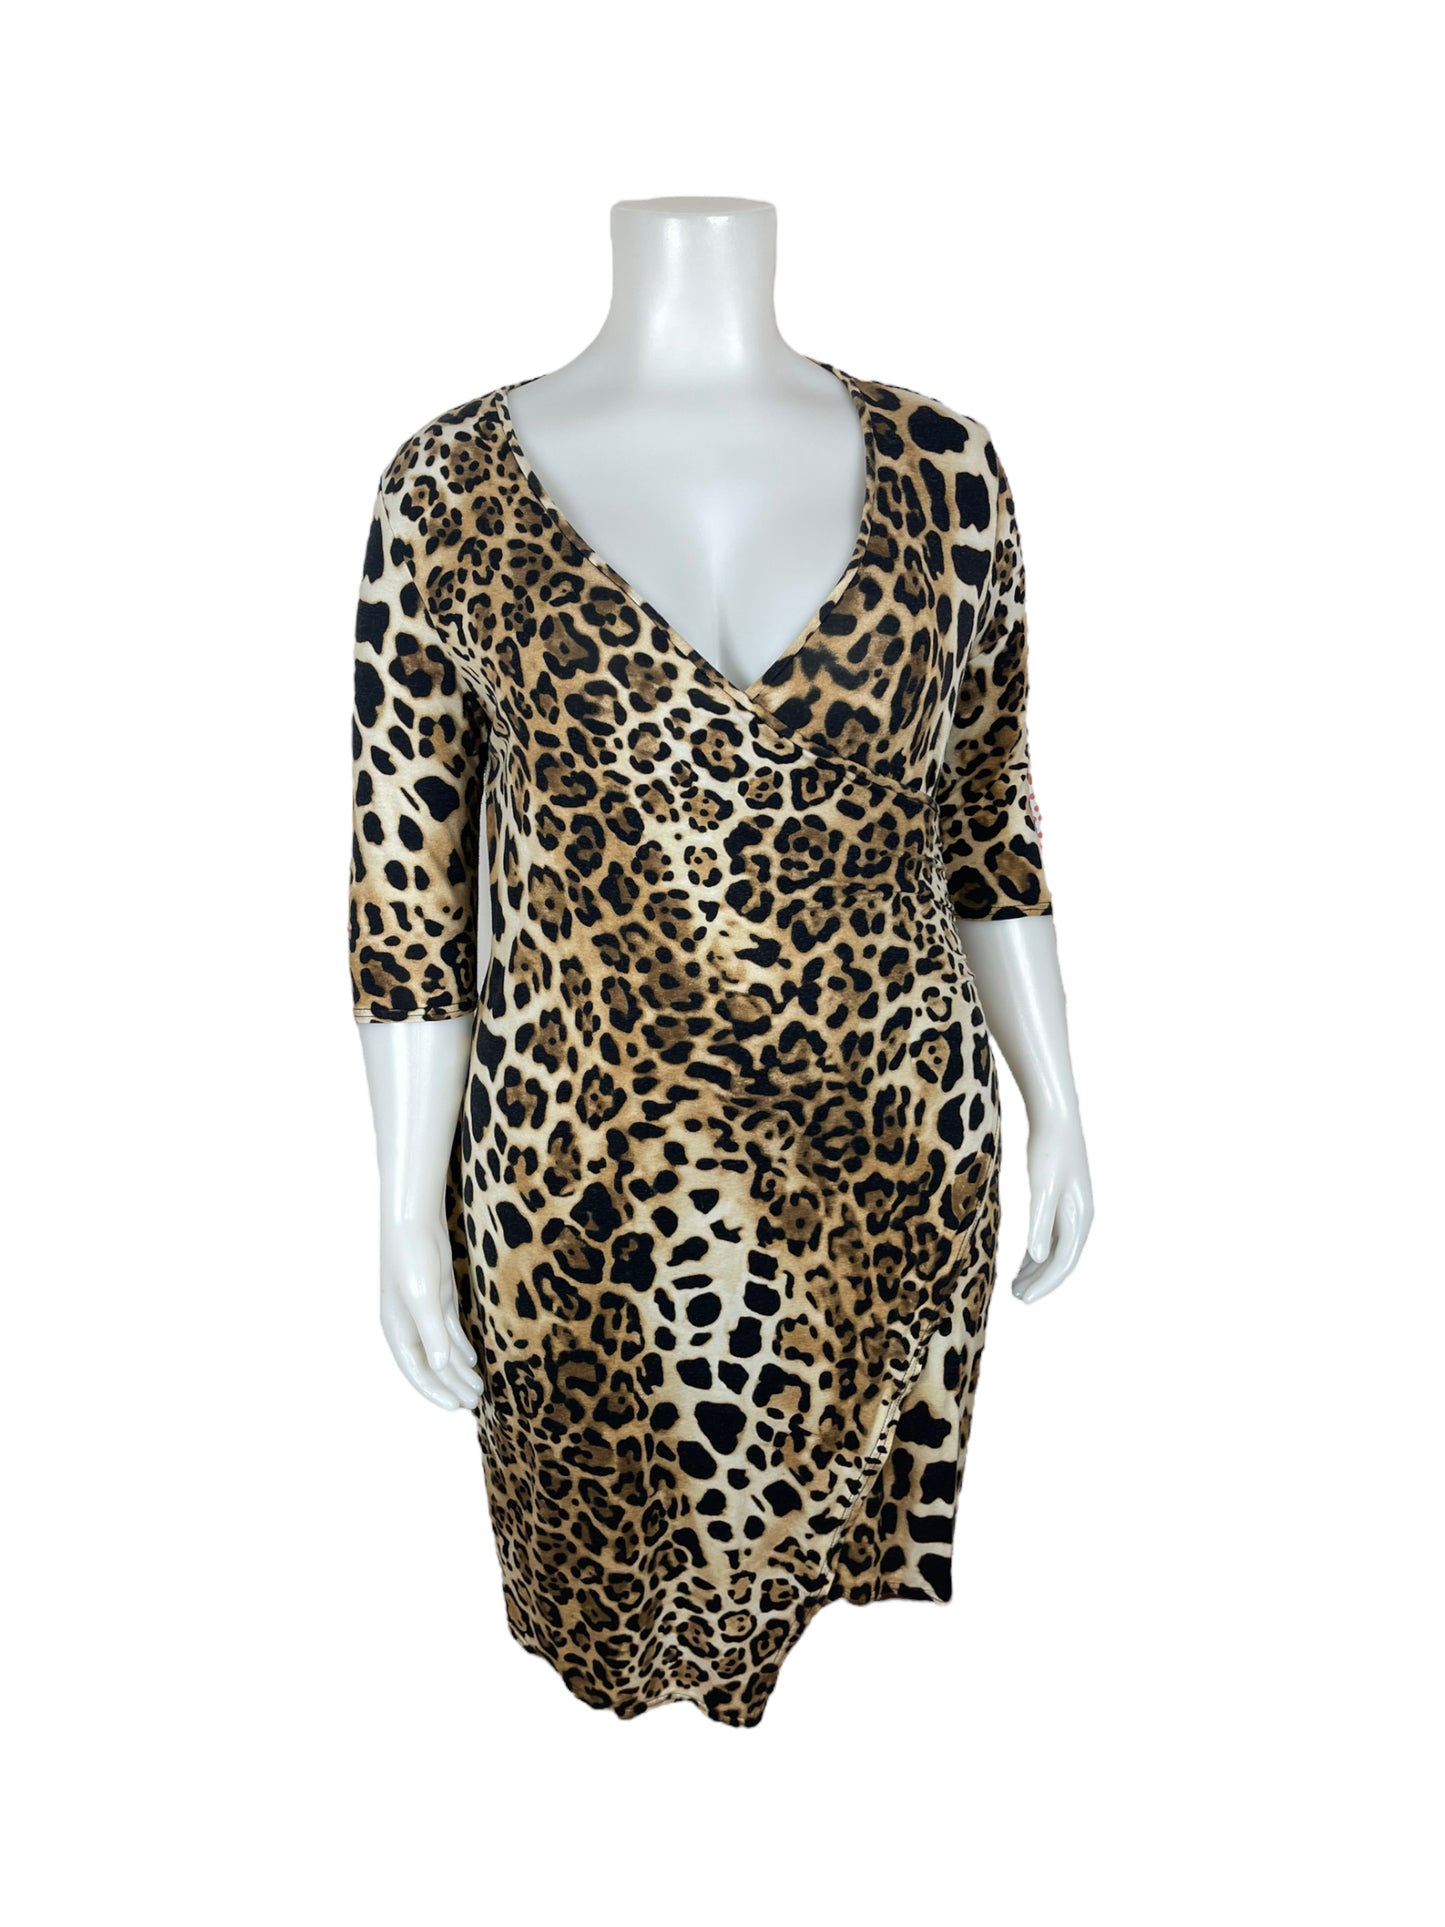 “Joseph Ribkoff” Vintage Asymmetrical Leopard Print Dress